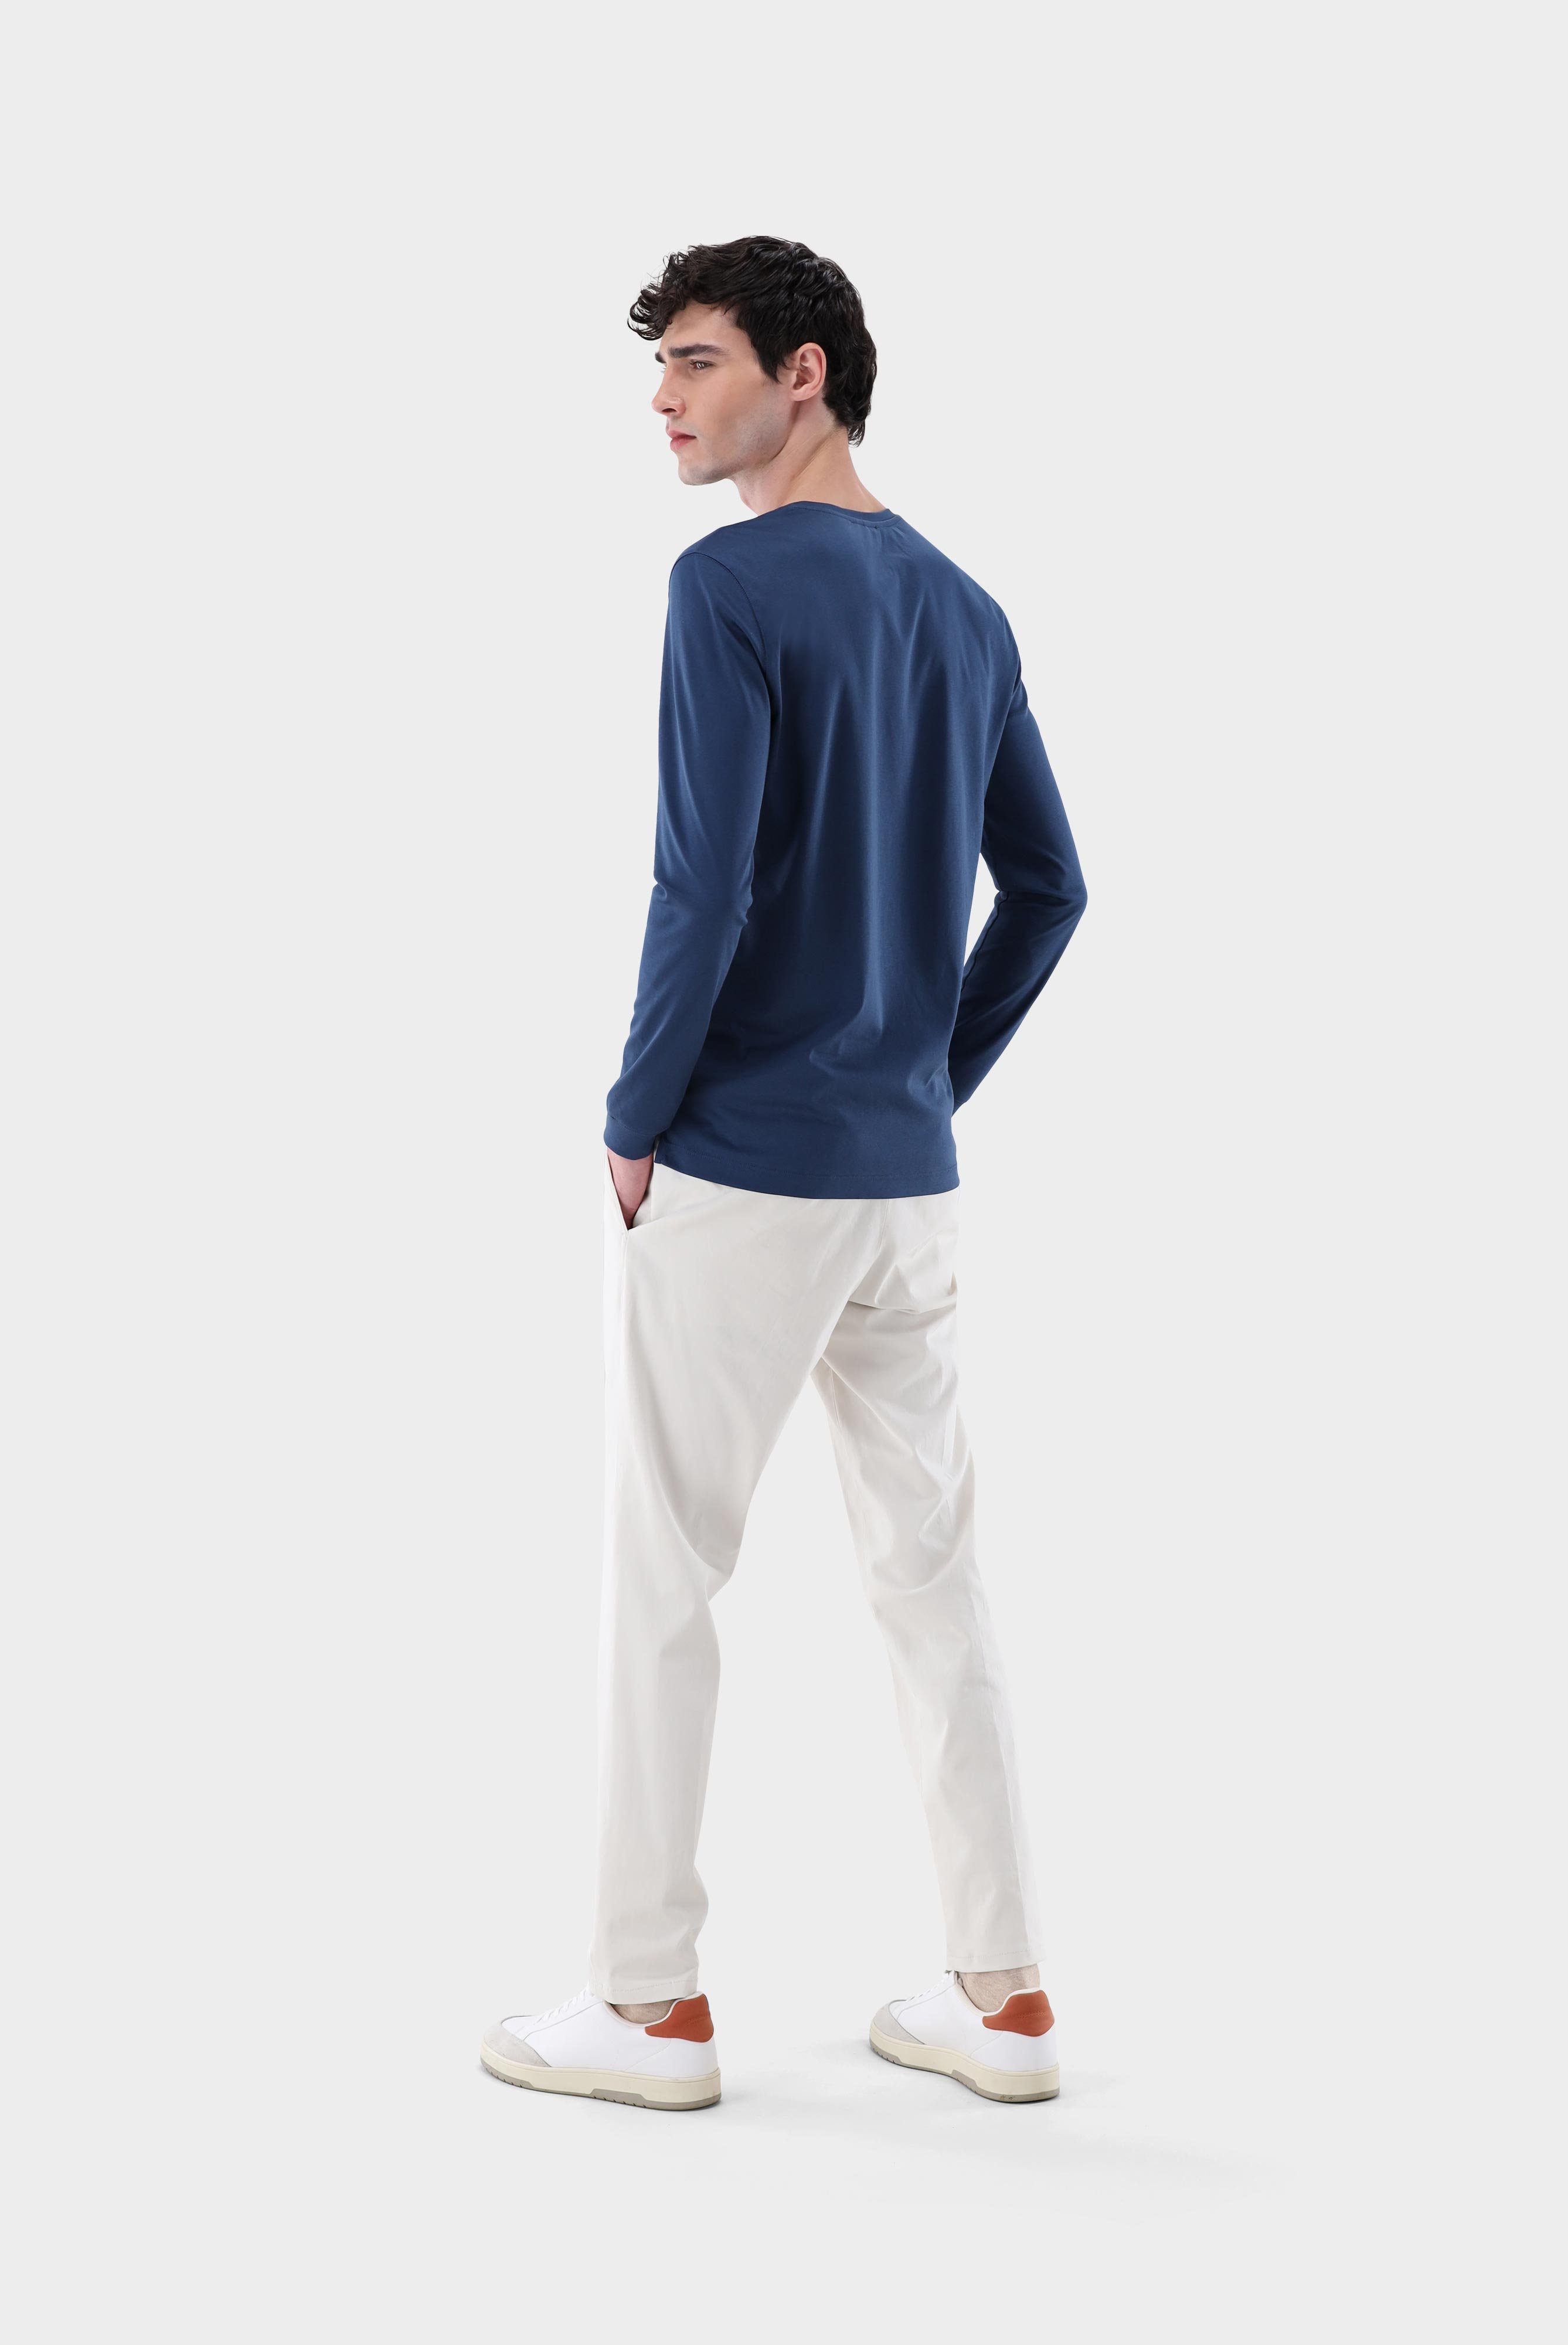 T-Shirts+Long Sleeve T-shirt Swiss Cotton+20.1718.UX.180031.780.X3L